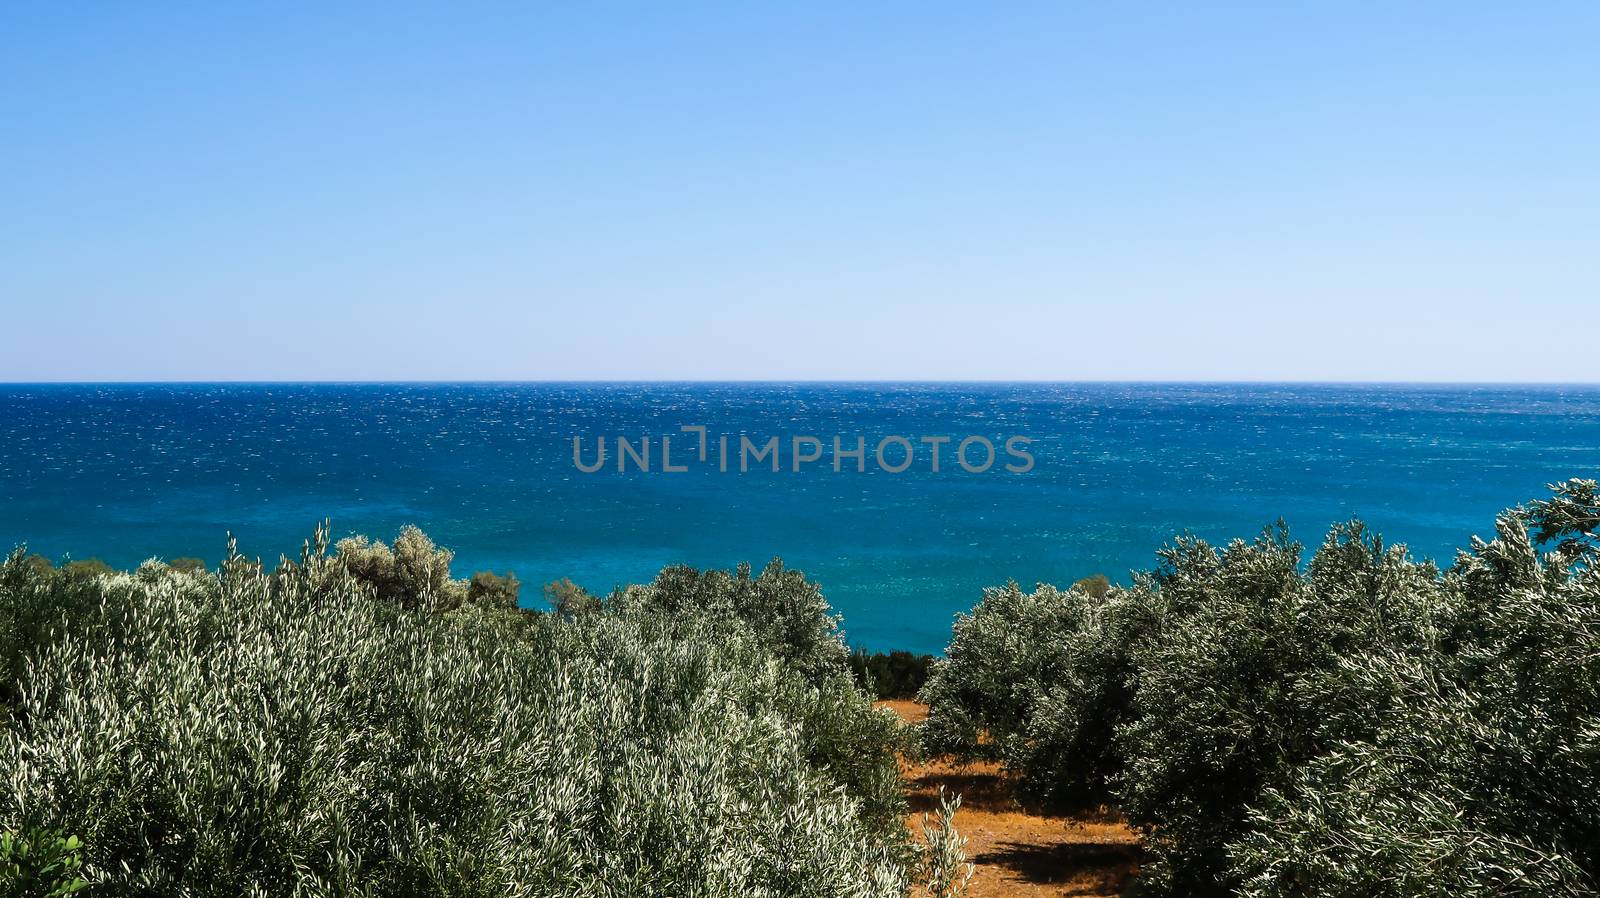 Olive trees and the sea far away in Keratokampos, Crete by codrinn